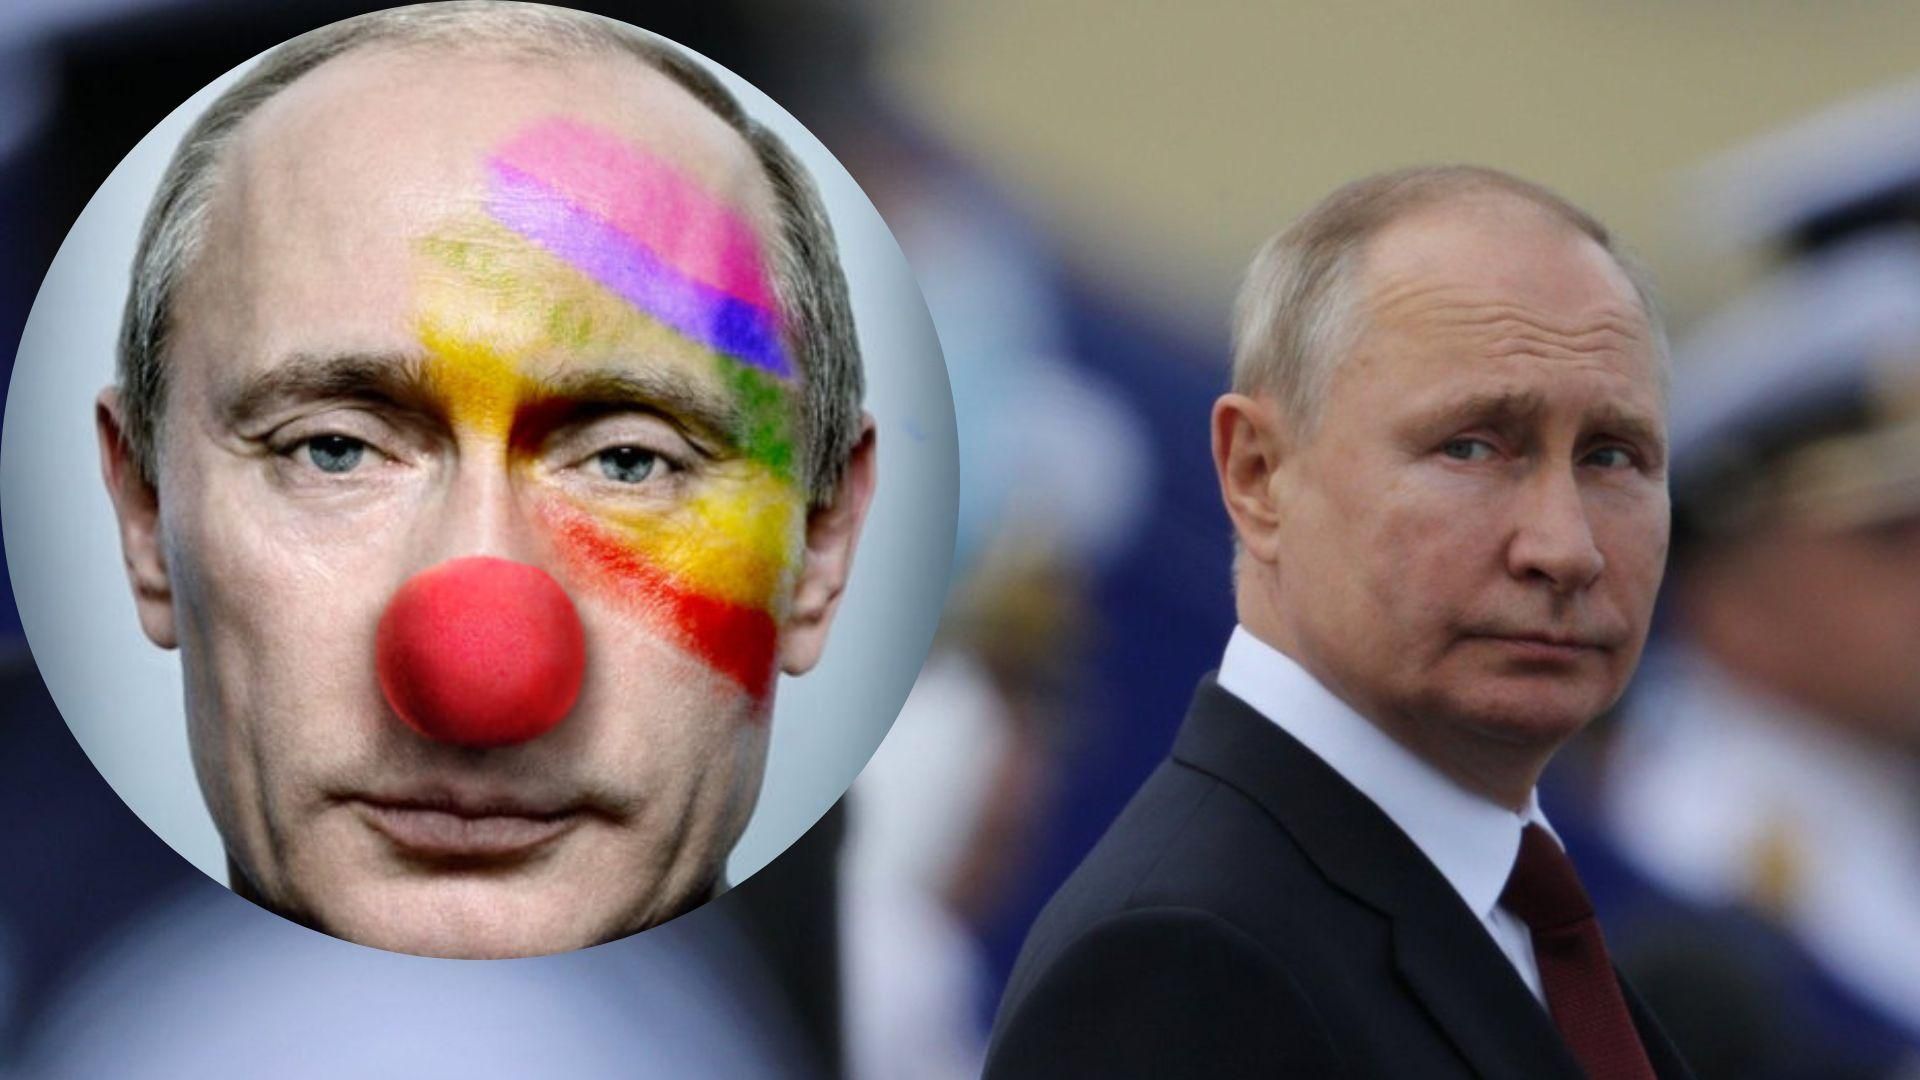 Путин клоун - швейцарской газете угрожают судом - 24 Канал